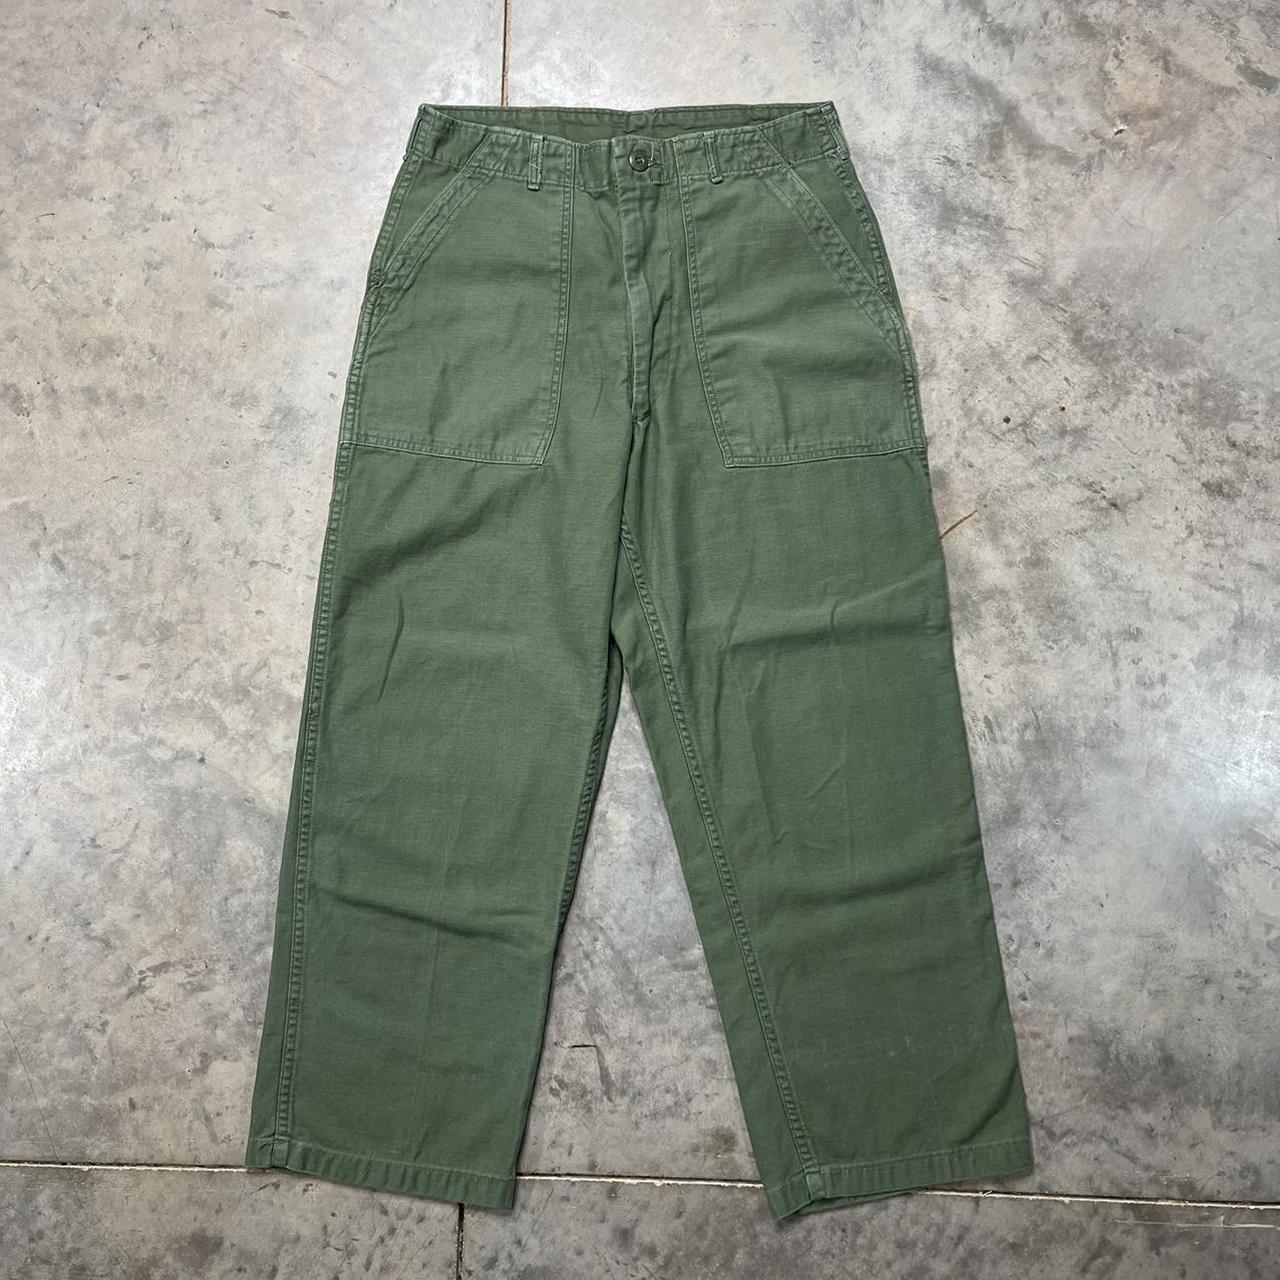 Vintage OG 107 Military Fatigue Pants Sateen Type 1... - Depop